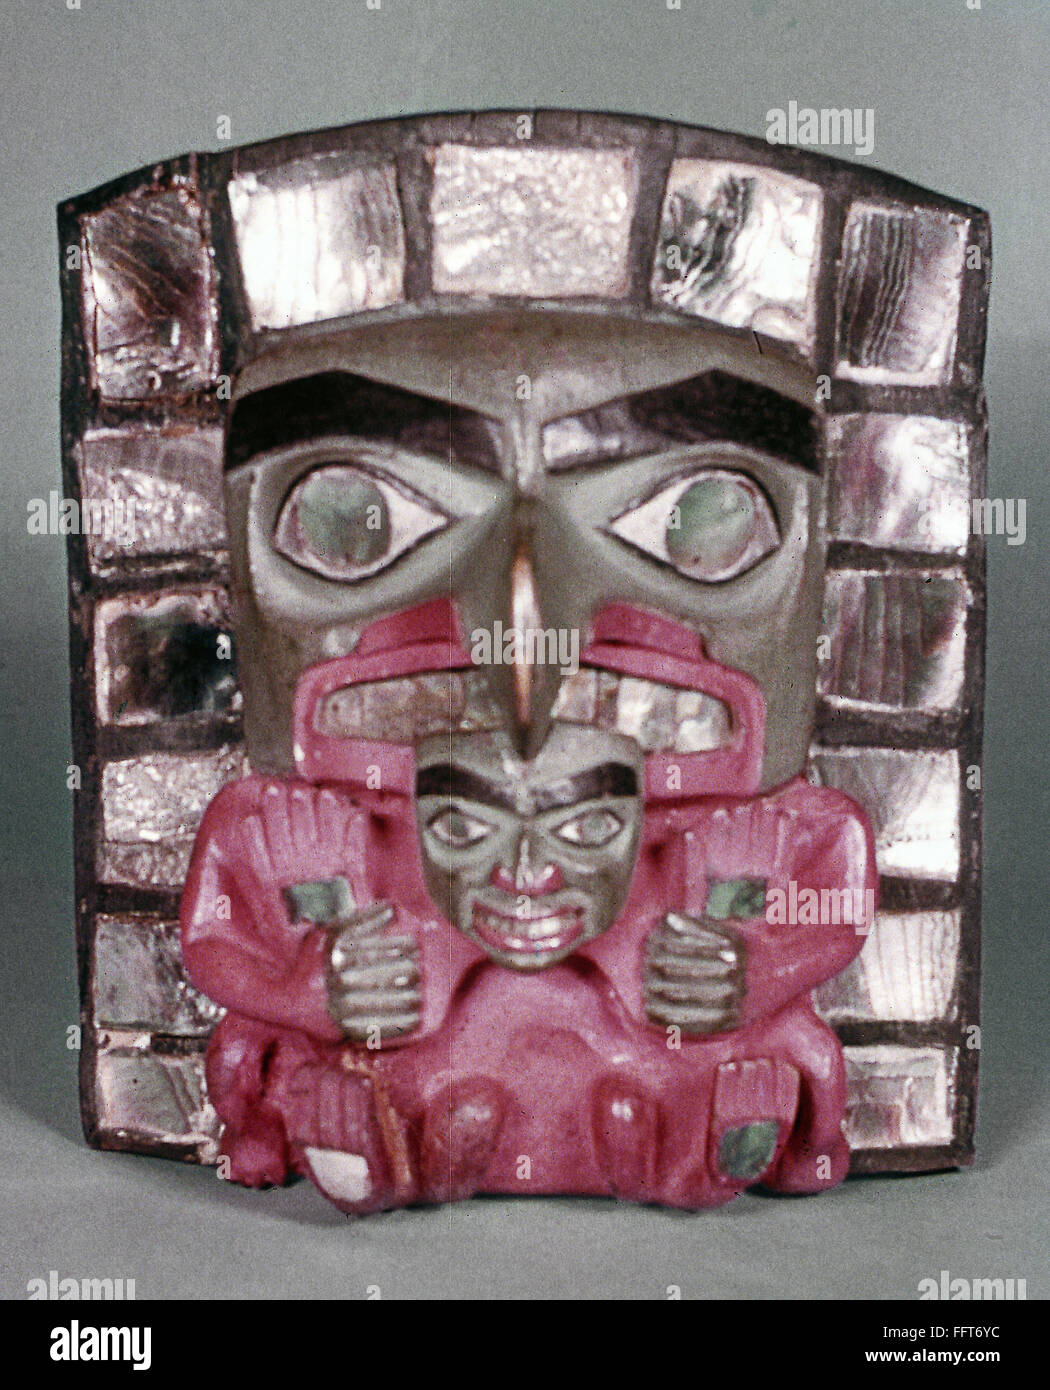 ALASKA: TLINGIT ORNAMENT. /nTlingit carved headdress ornament. Stock Photo